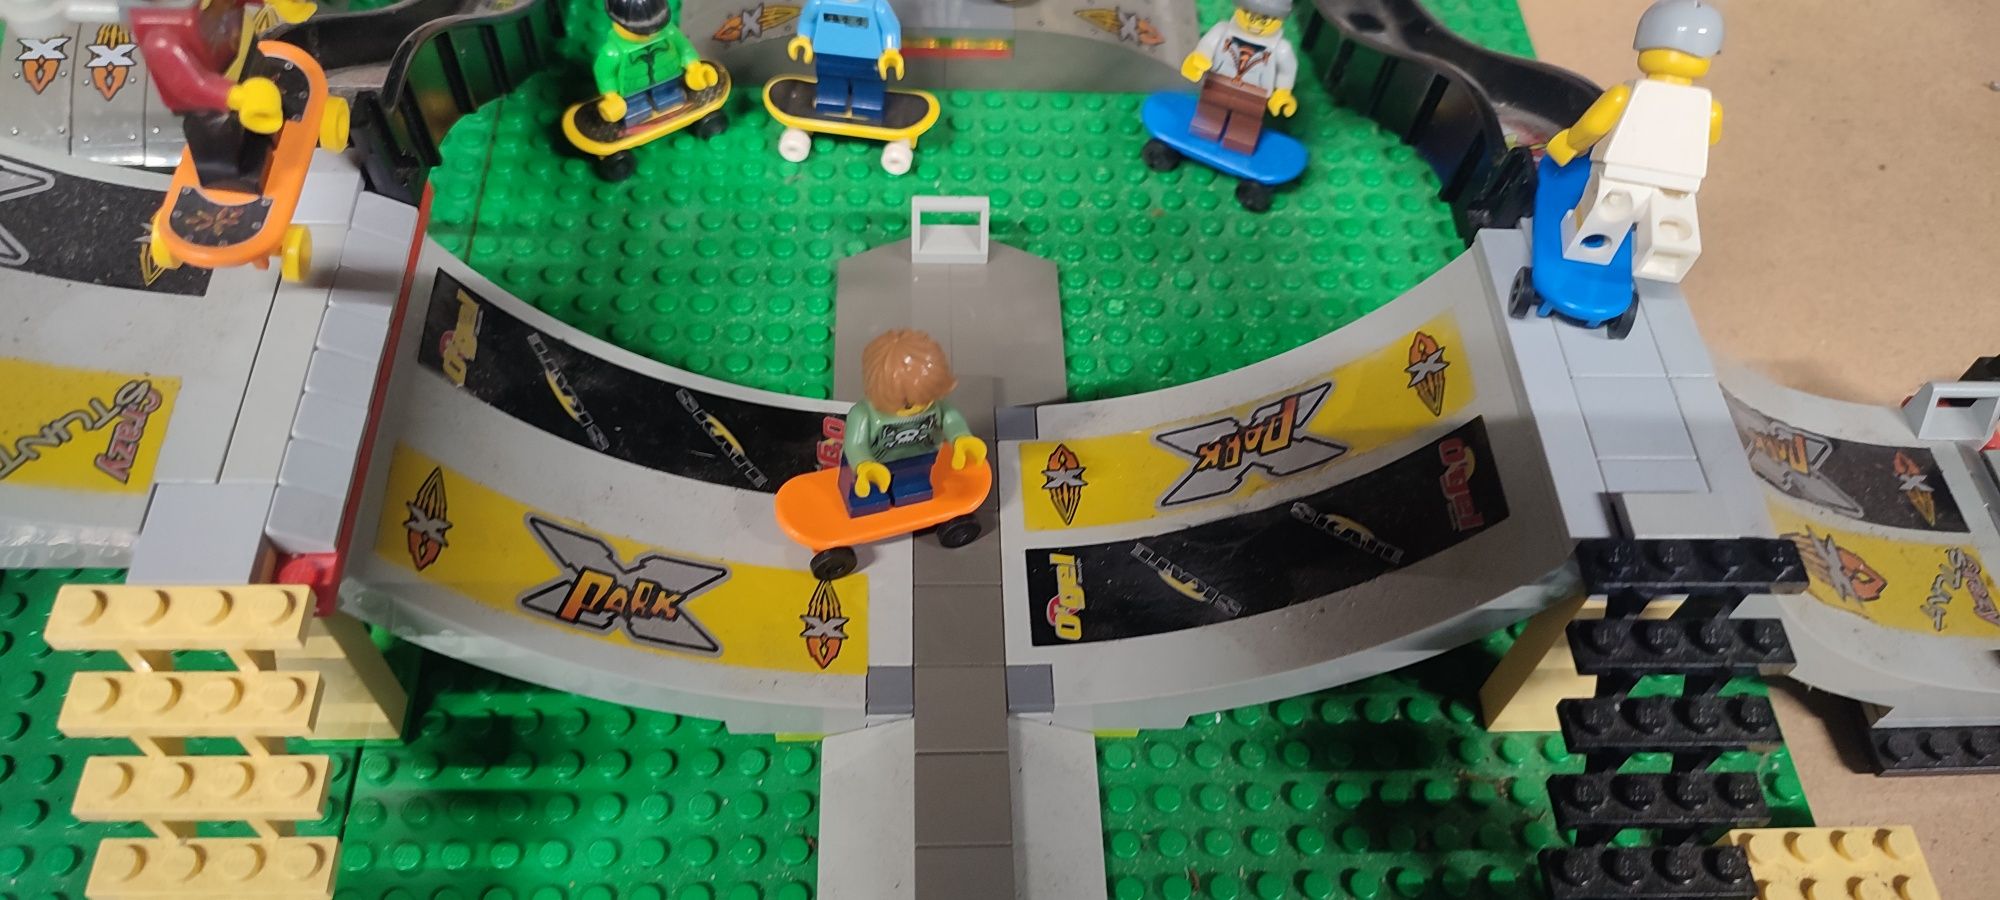 LEGO skate park 3535,3537